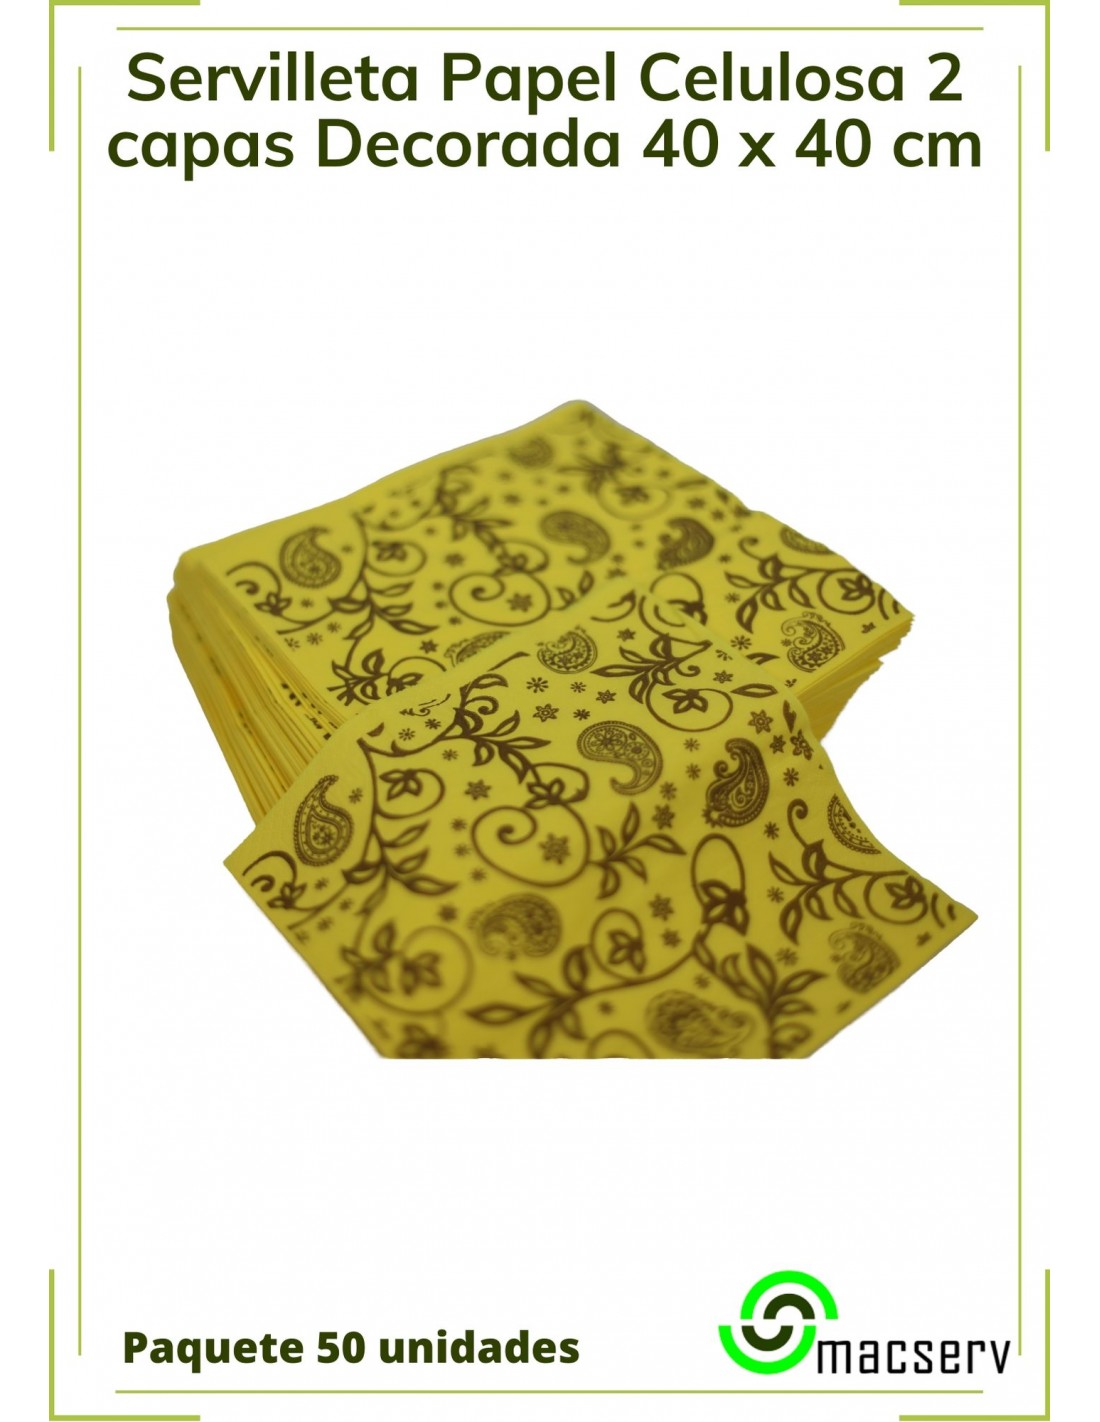 Servilletas Papel Celulosa 2 capas Decoradas 40 x 40 cm Diseño  Amarillo-Marrón